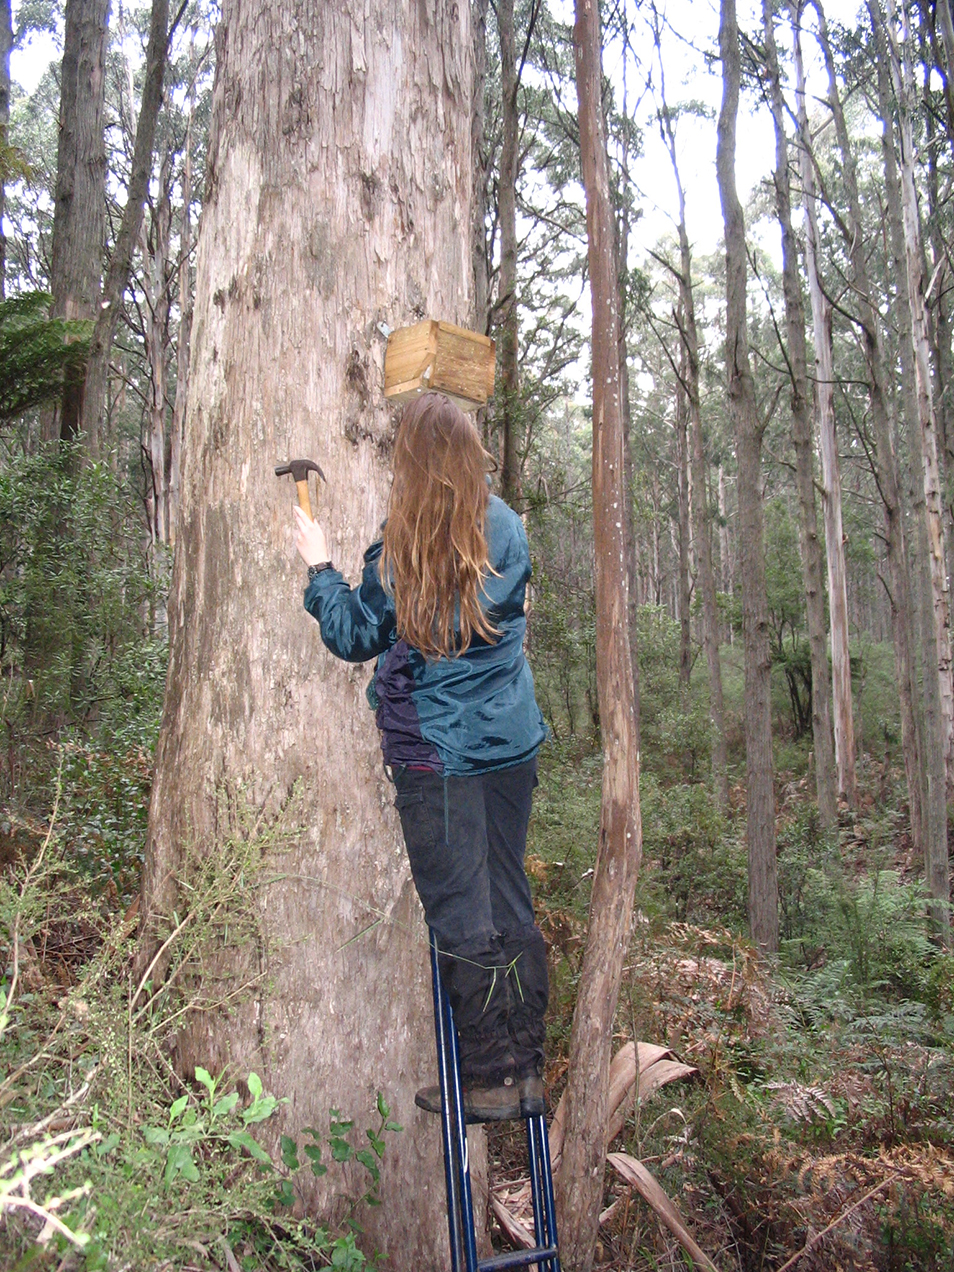 Marissa Parrott placing a nestbox in a tree